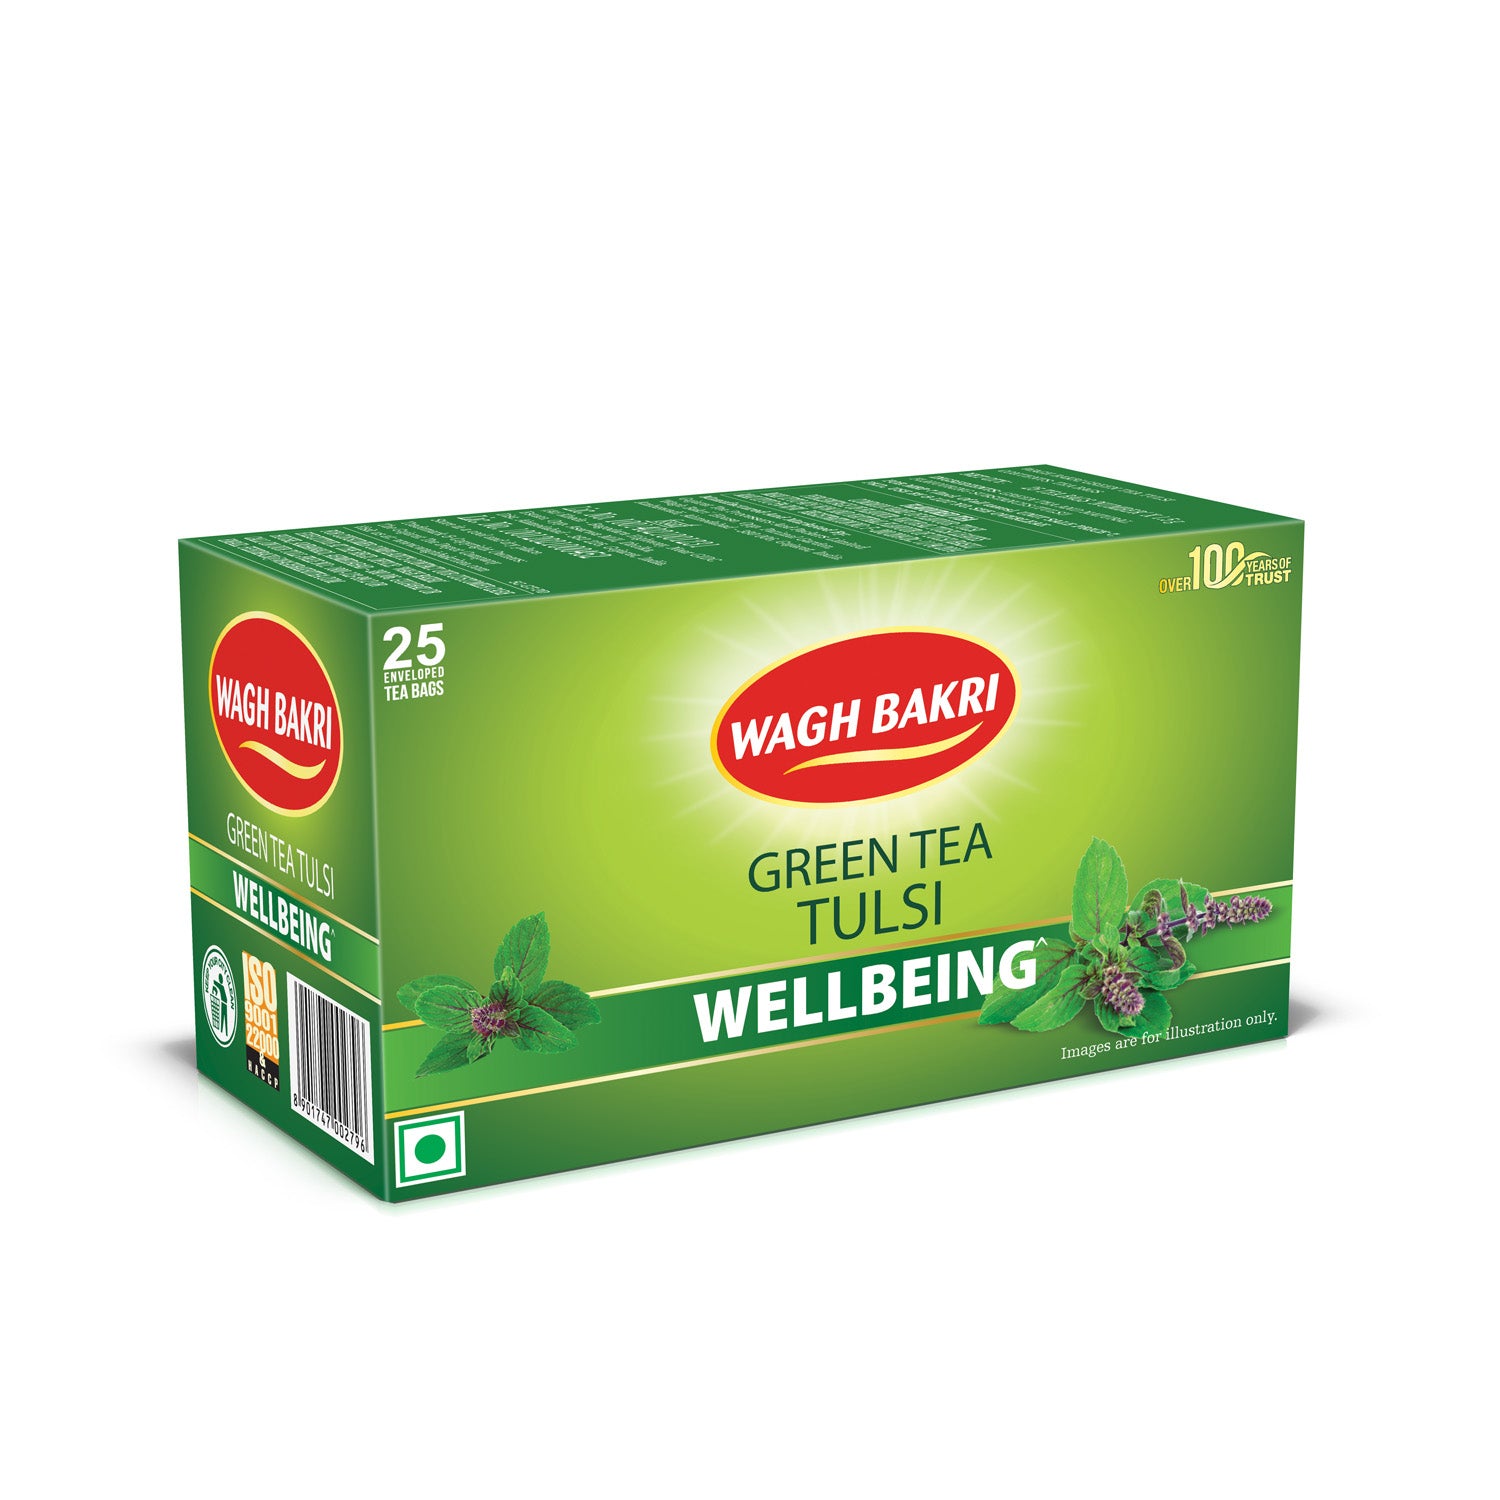 Wagh Bakri Tulsi Green Tea Bags